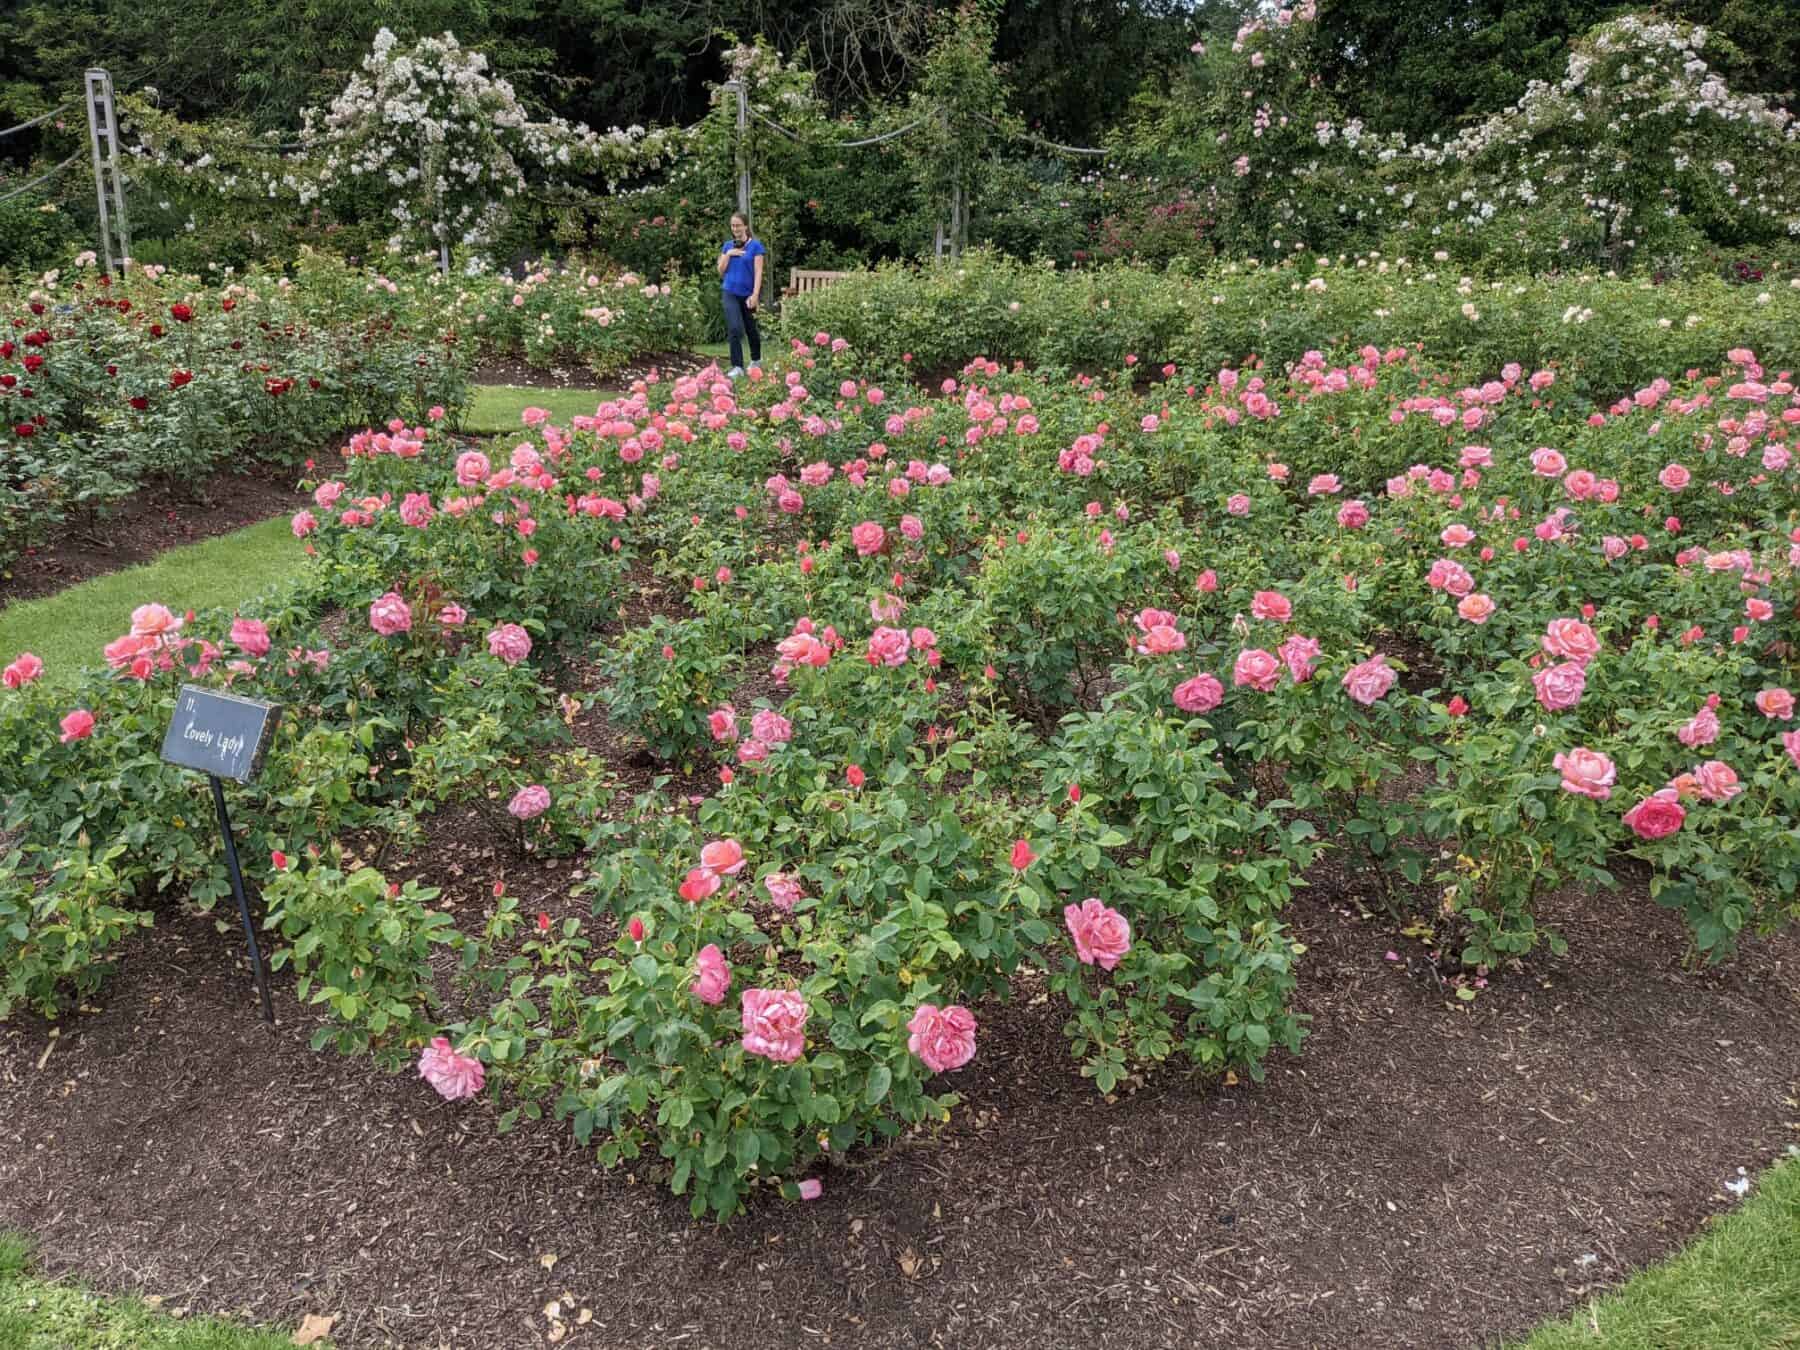 Queen Mary’s Rose Garden